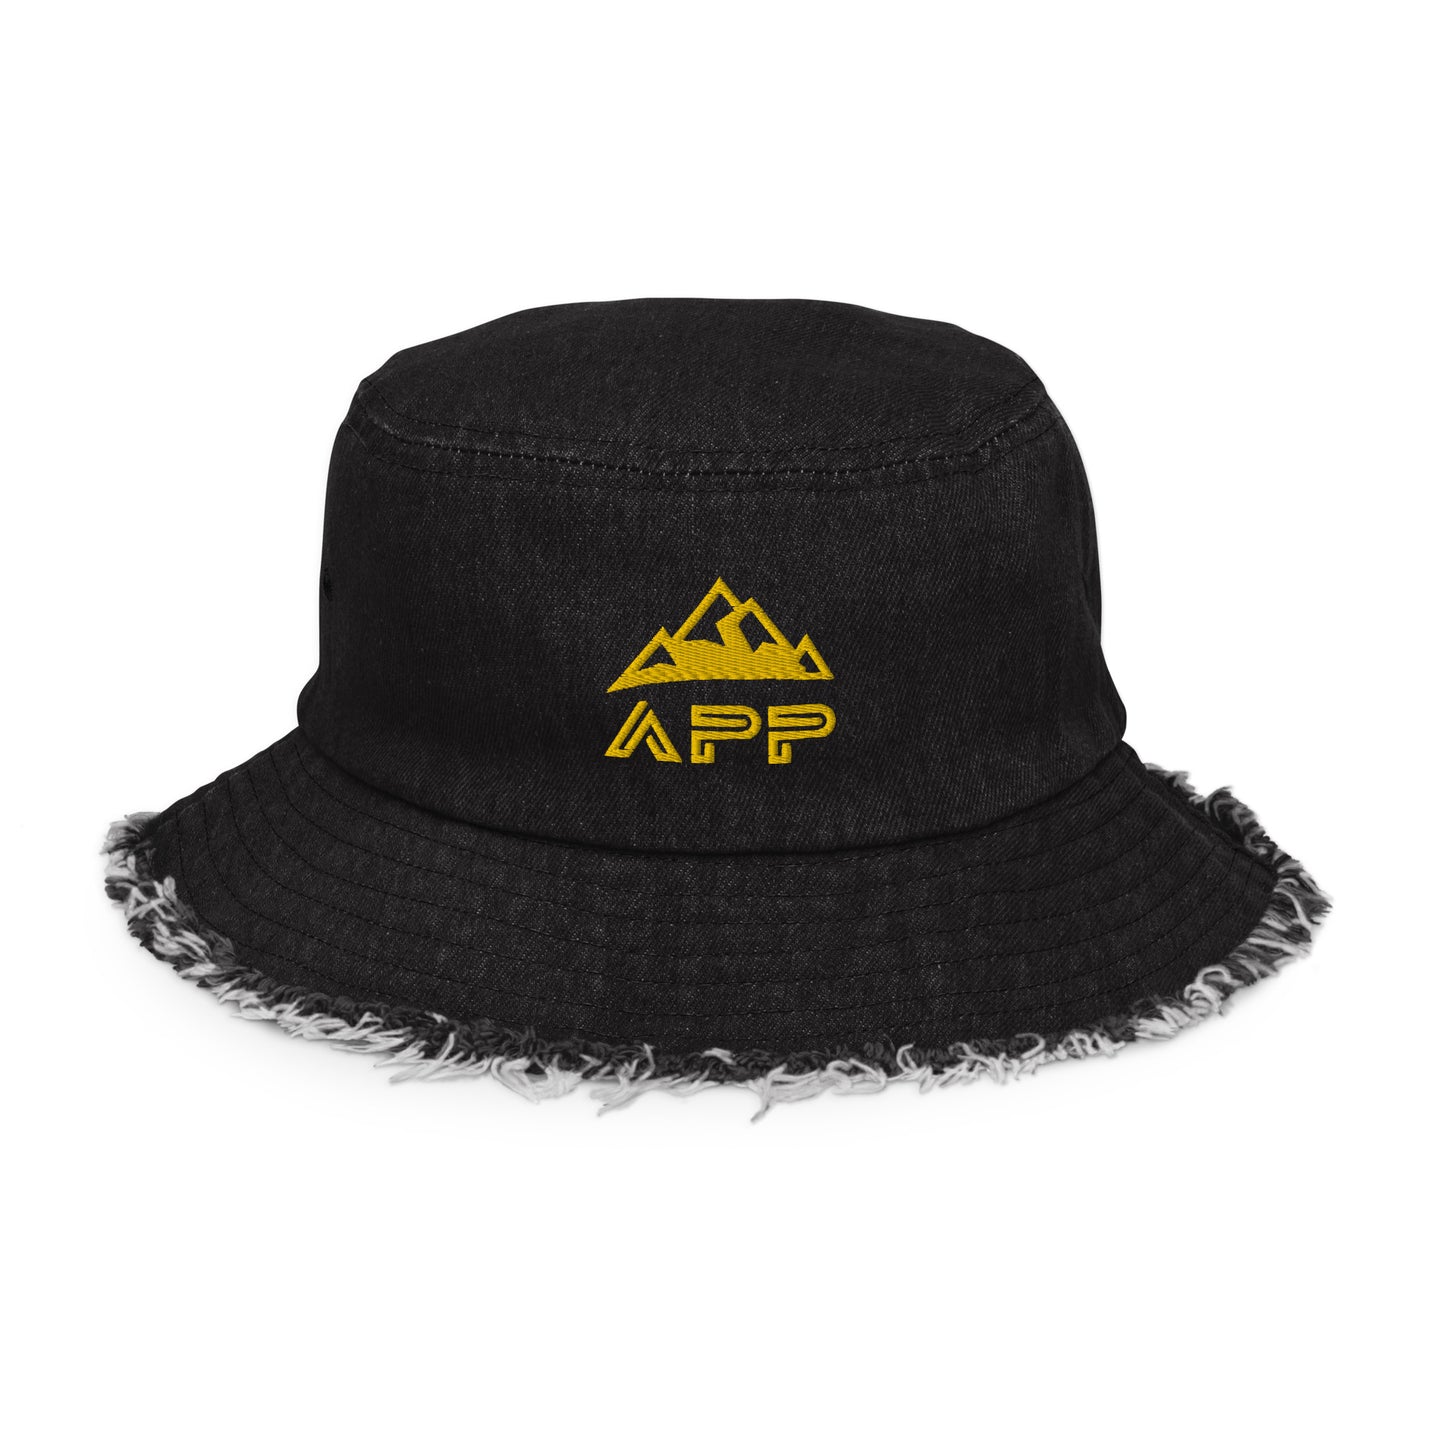 APP Distressed denim bucket hat